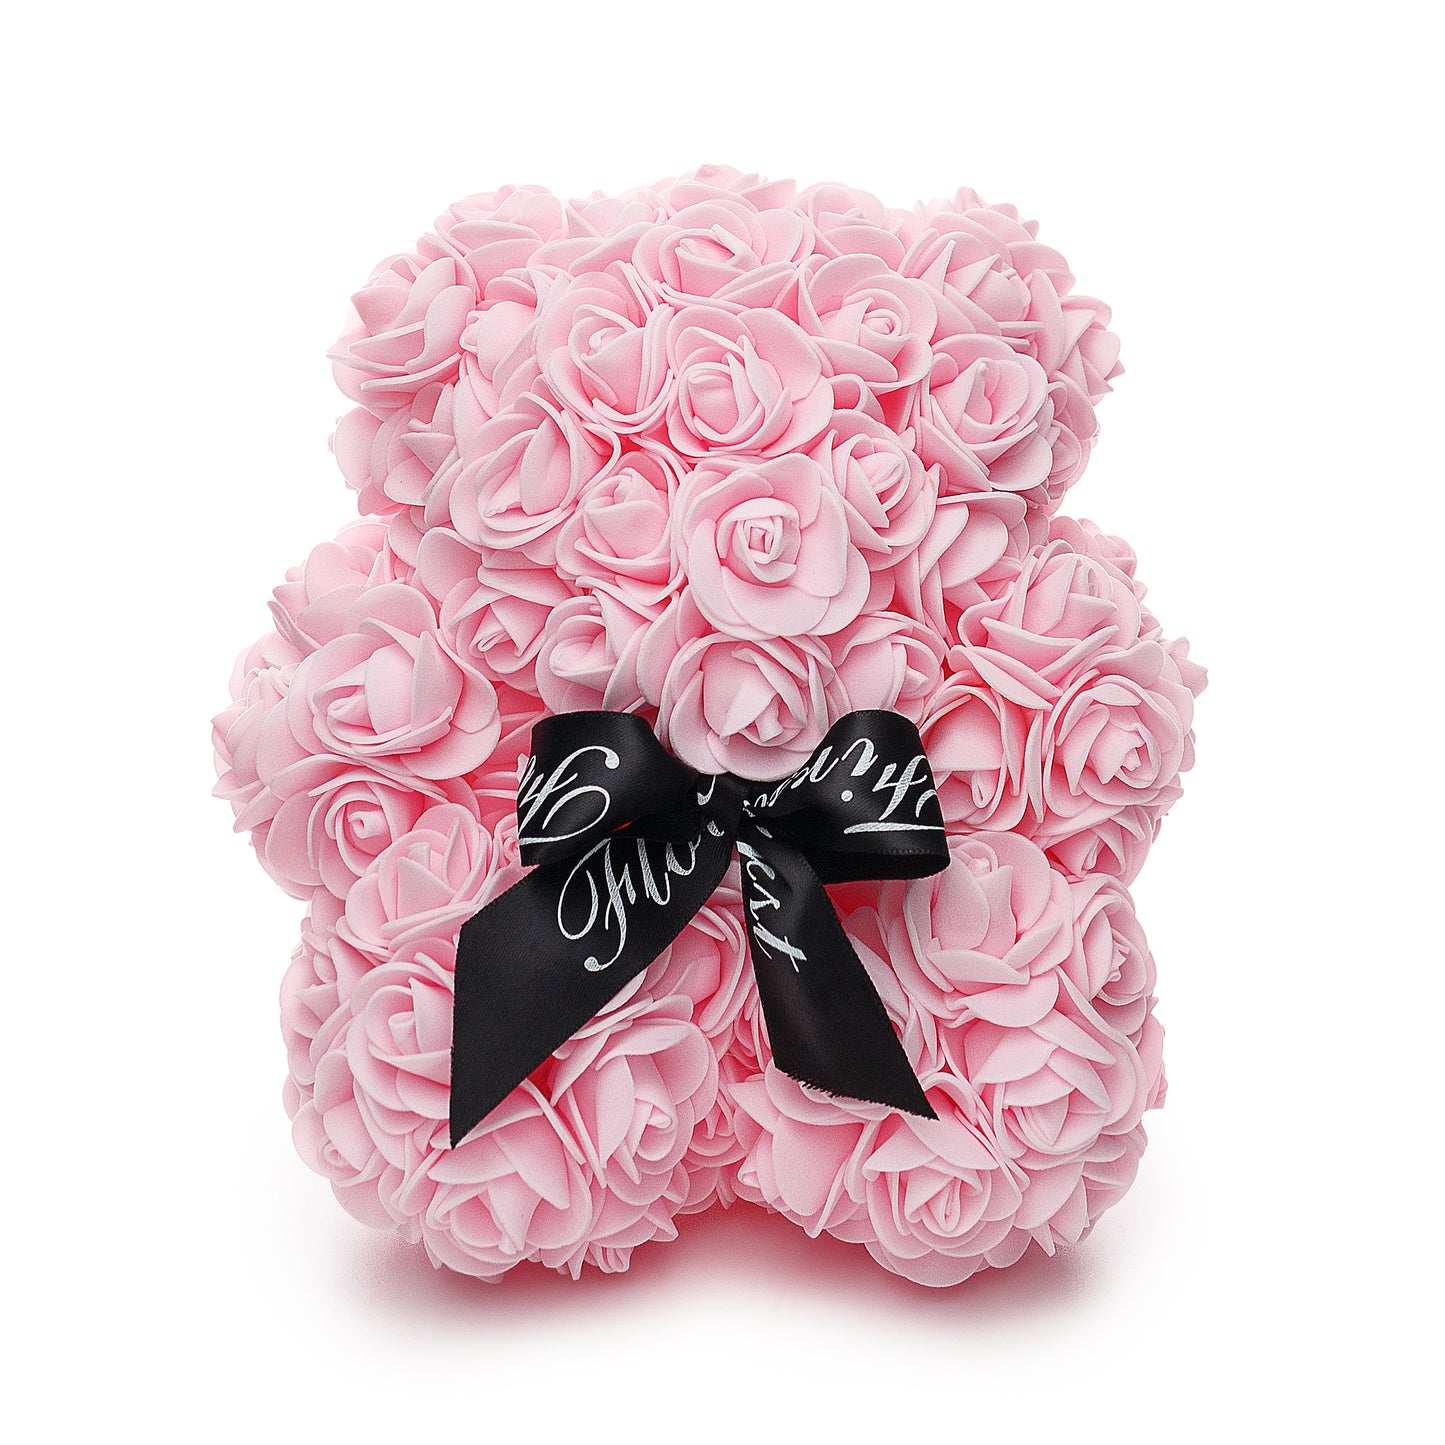 Light Pink Luxury Handmade Rose Teddy Bear